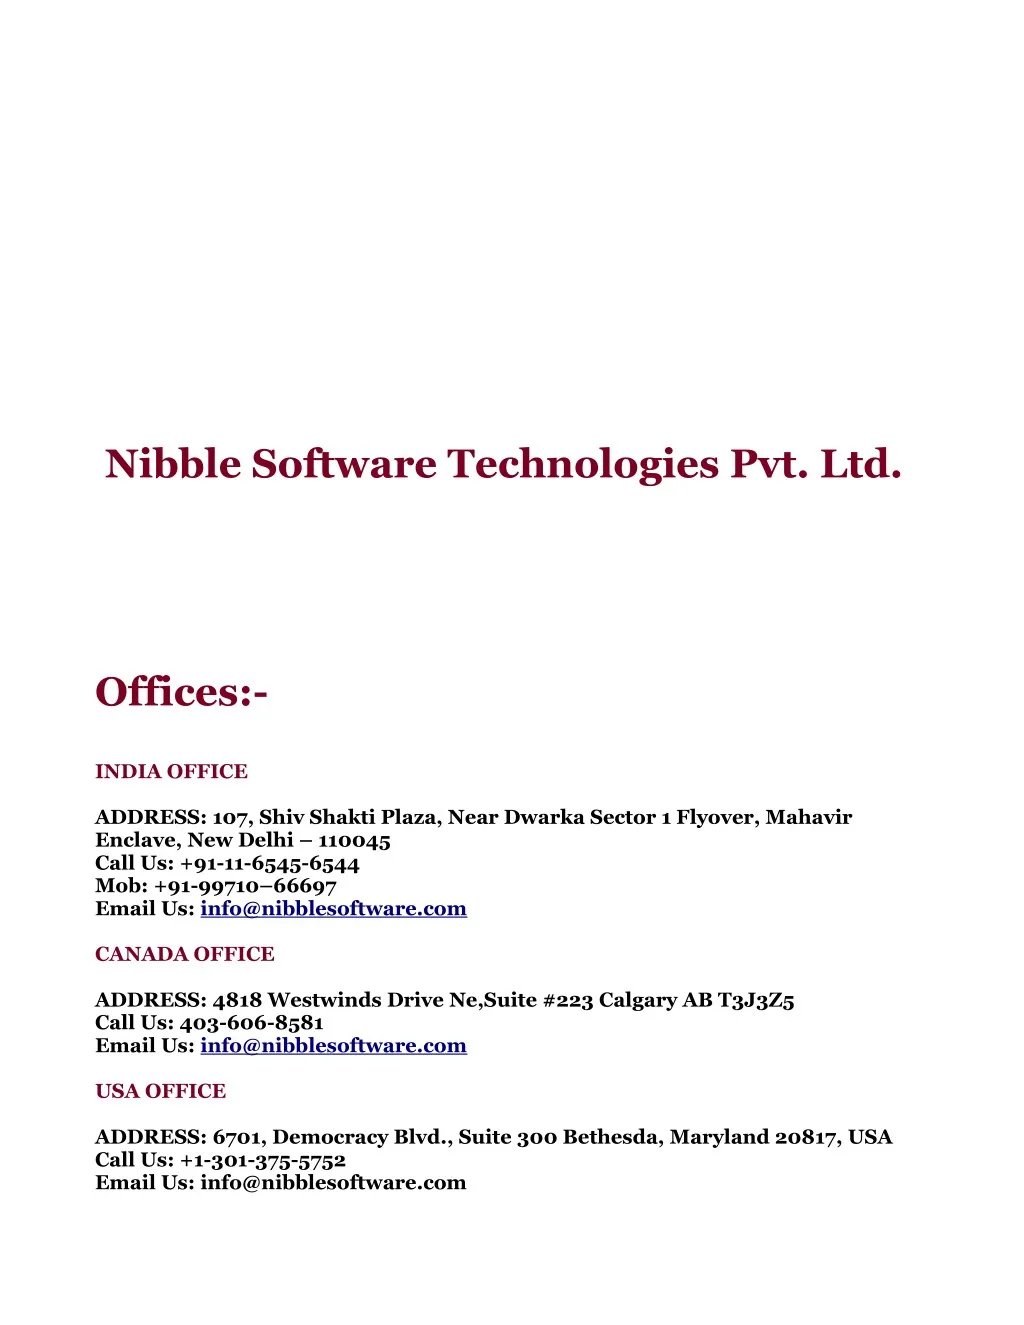 nibble software technologies pvt ltd n.